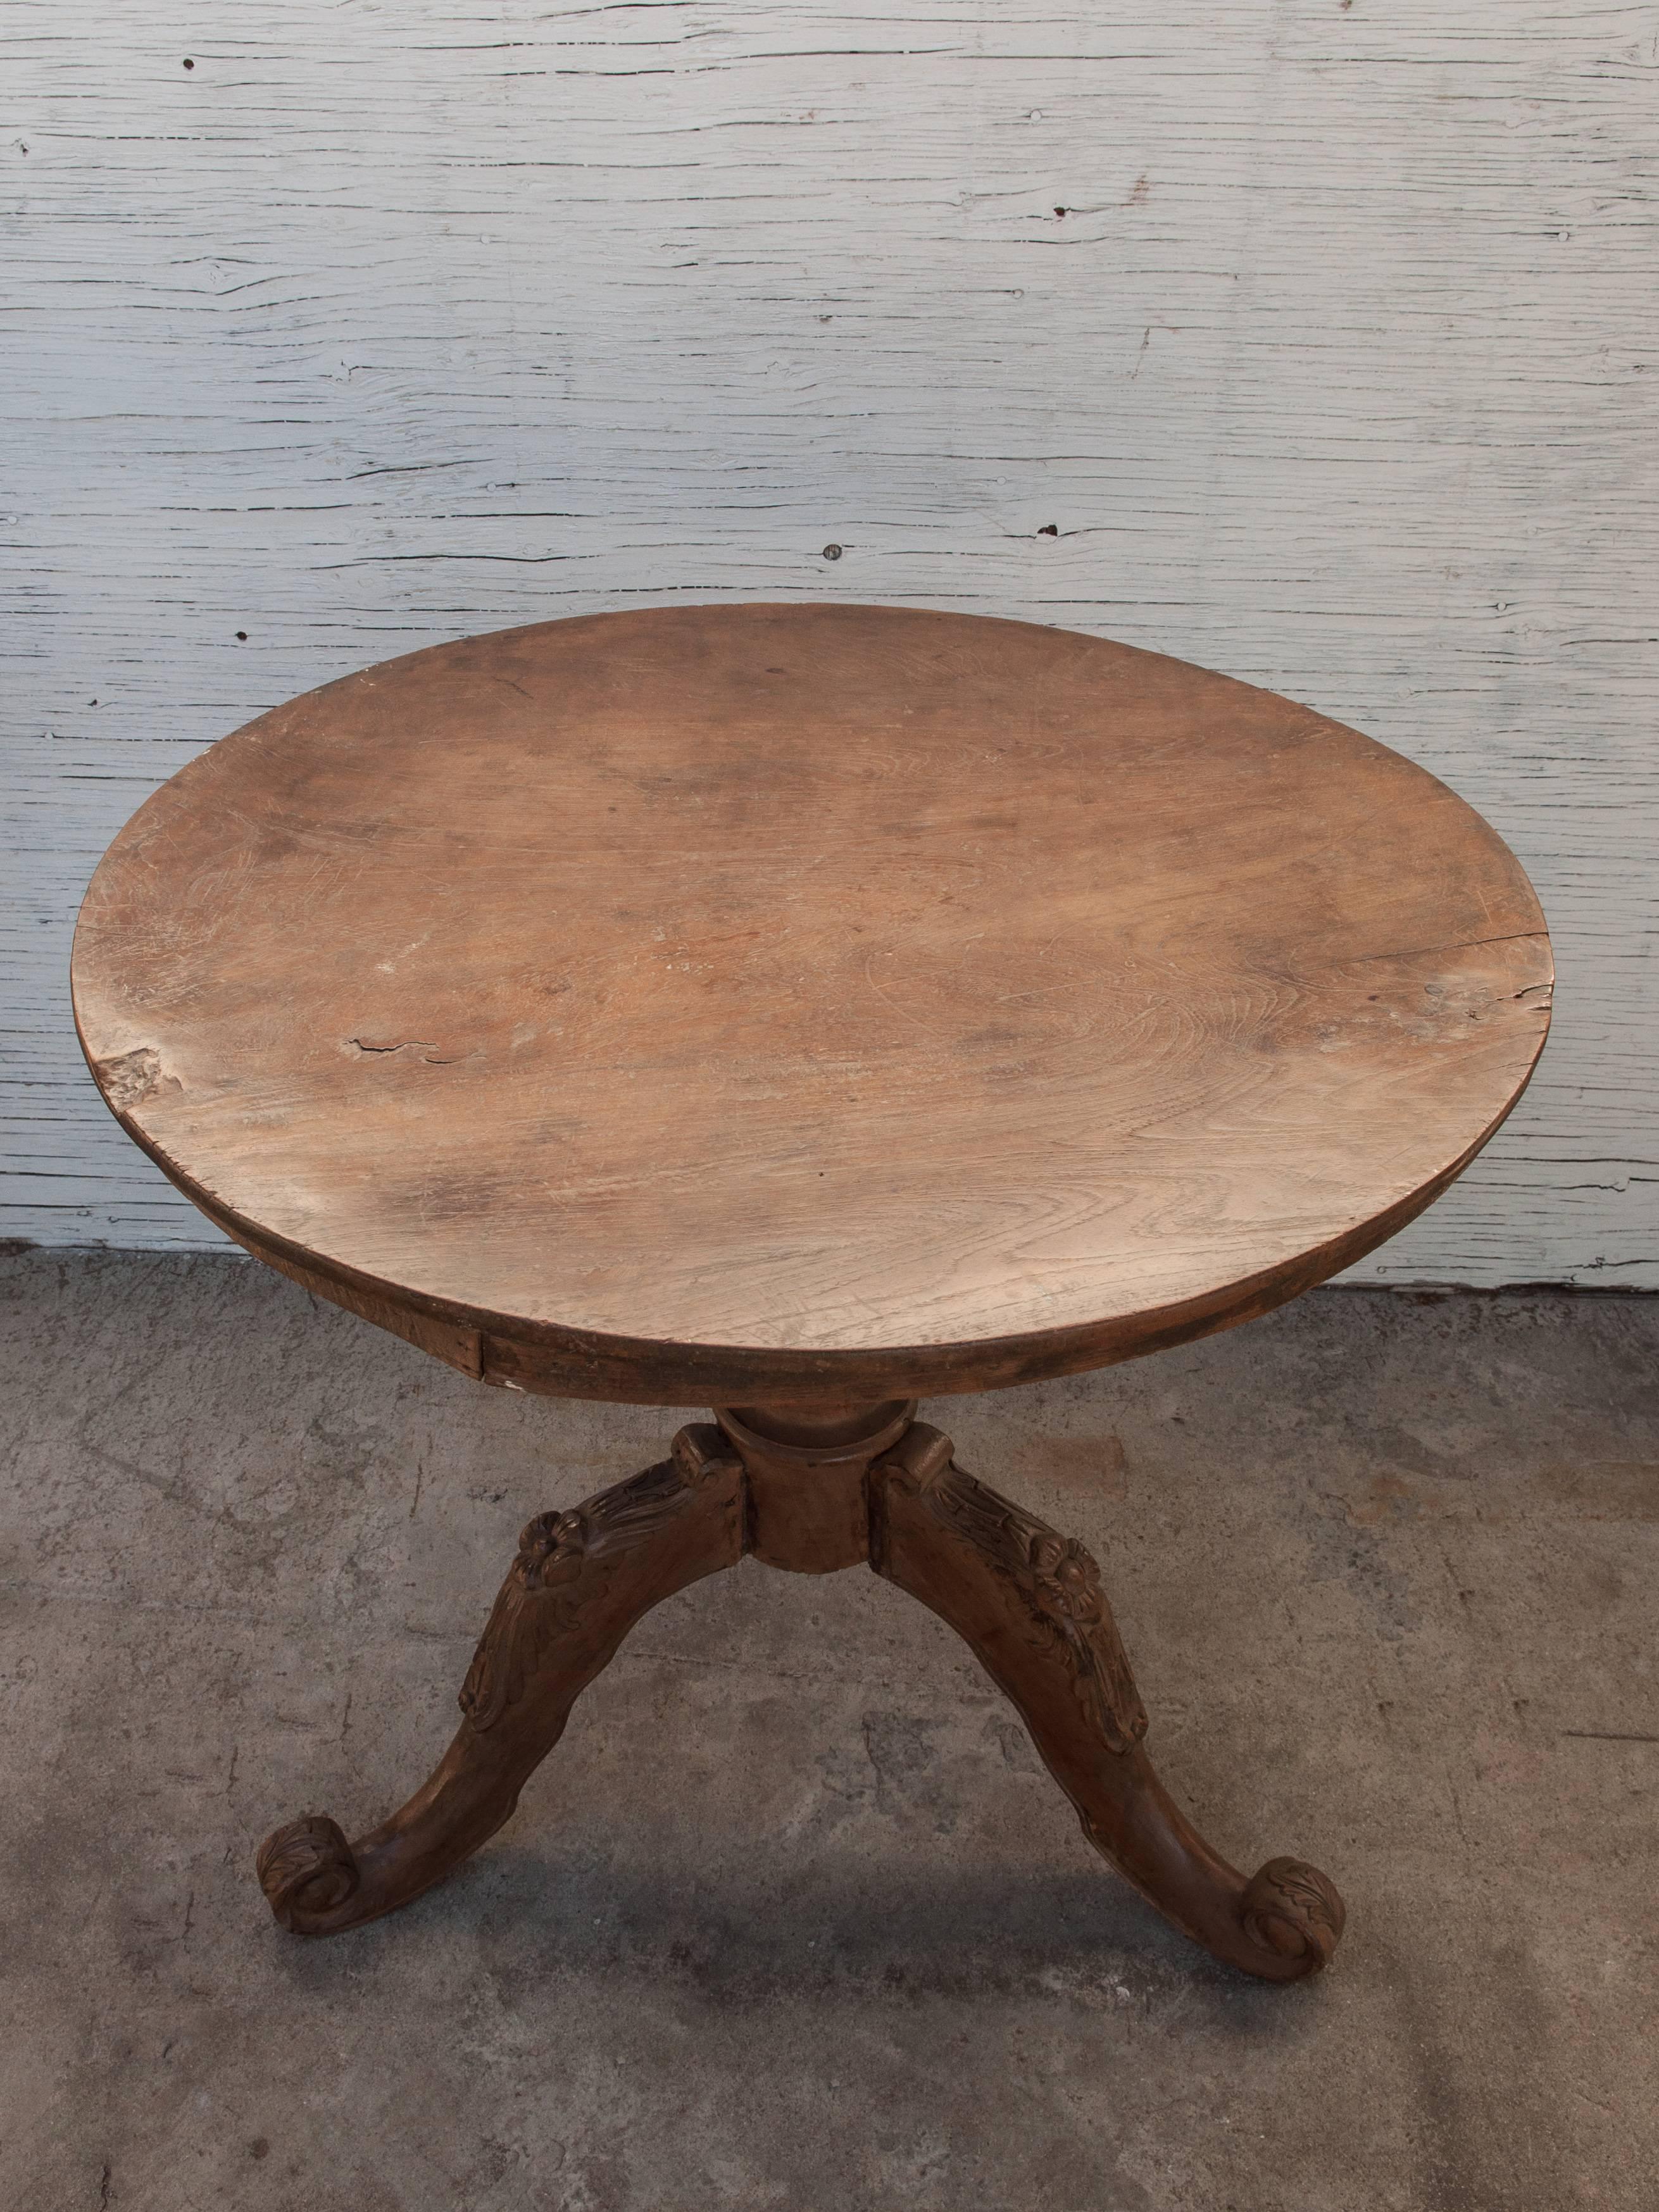 Rustic Round Teak Pedestal Table 33